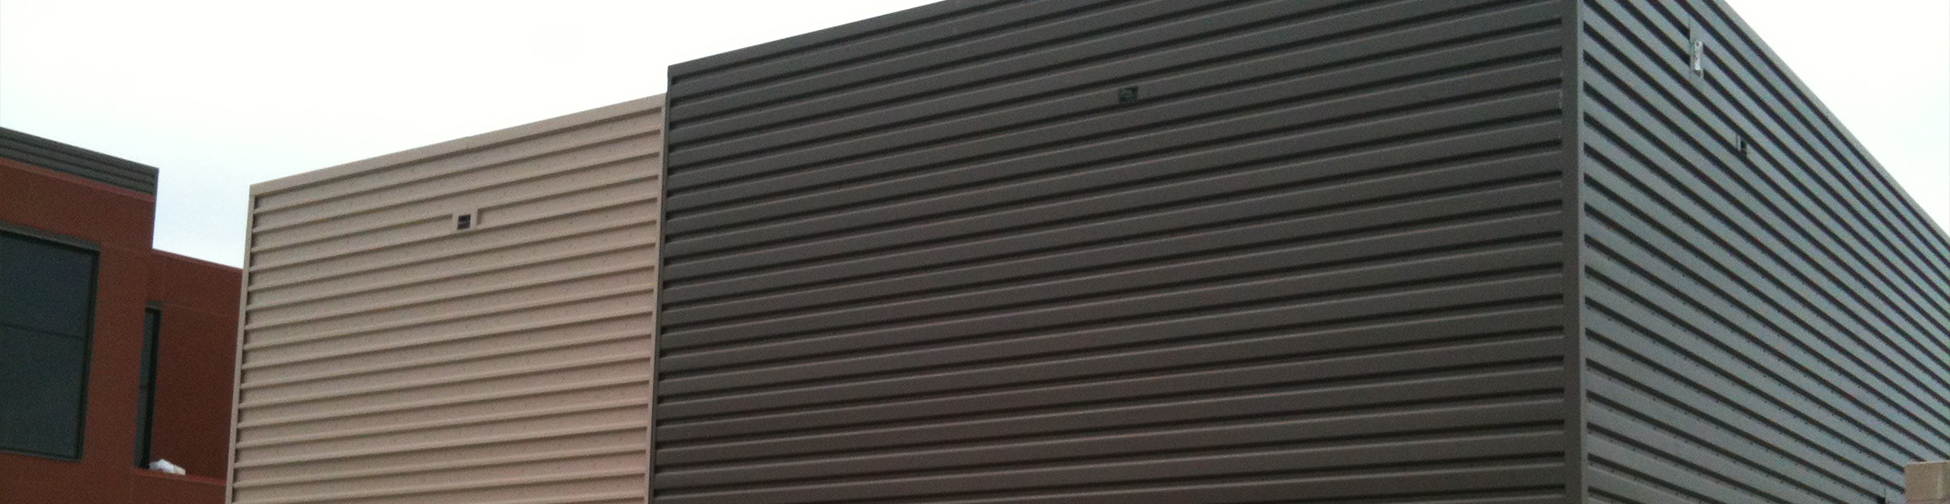 Reversed Box Rib™ Metal Roofing and Siding by AEP Span